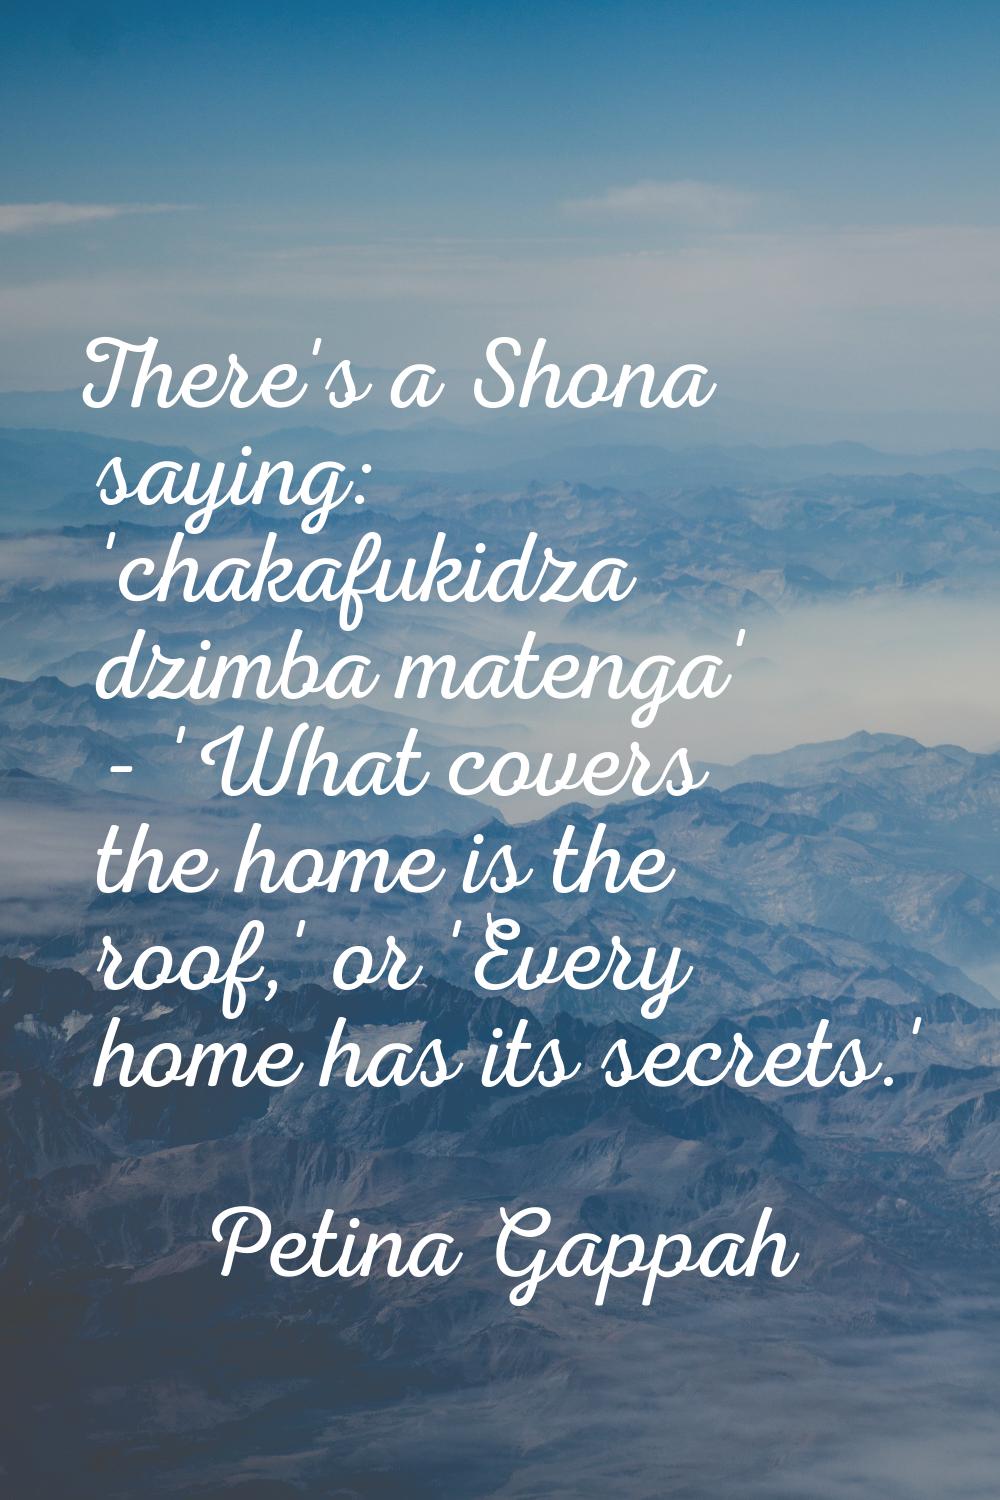 There's a Shona saying: 'chakafukidza dzimba matenga' - 'What covers the home is the roof,' or 'Eve